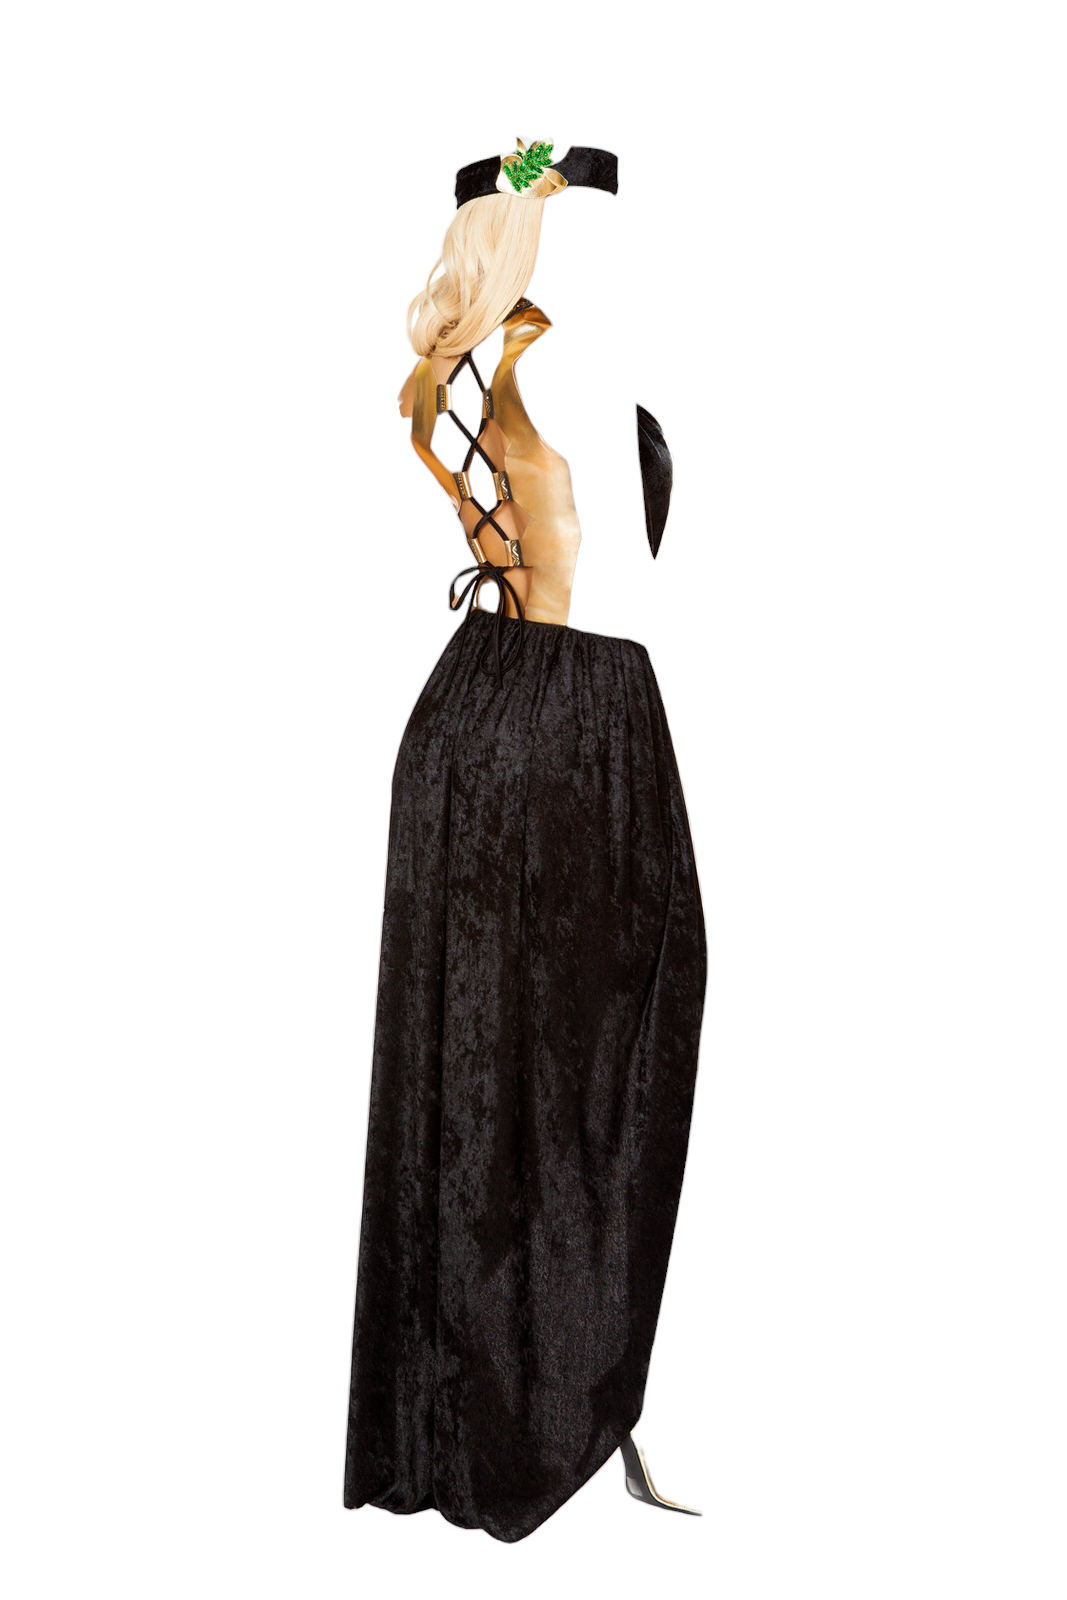 Roma Costume 2 PC Greek Goddess Long Dress with Lace-Up Back Black/Gold